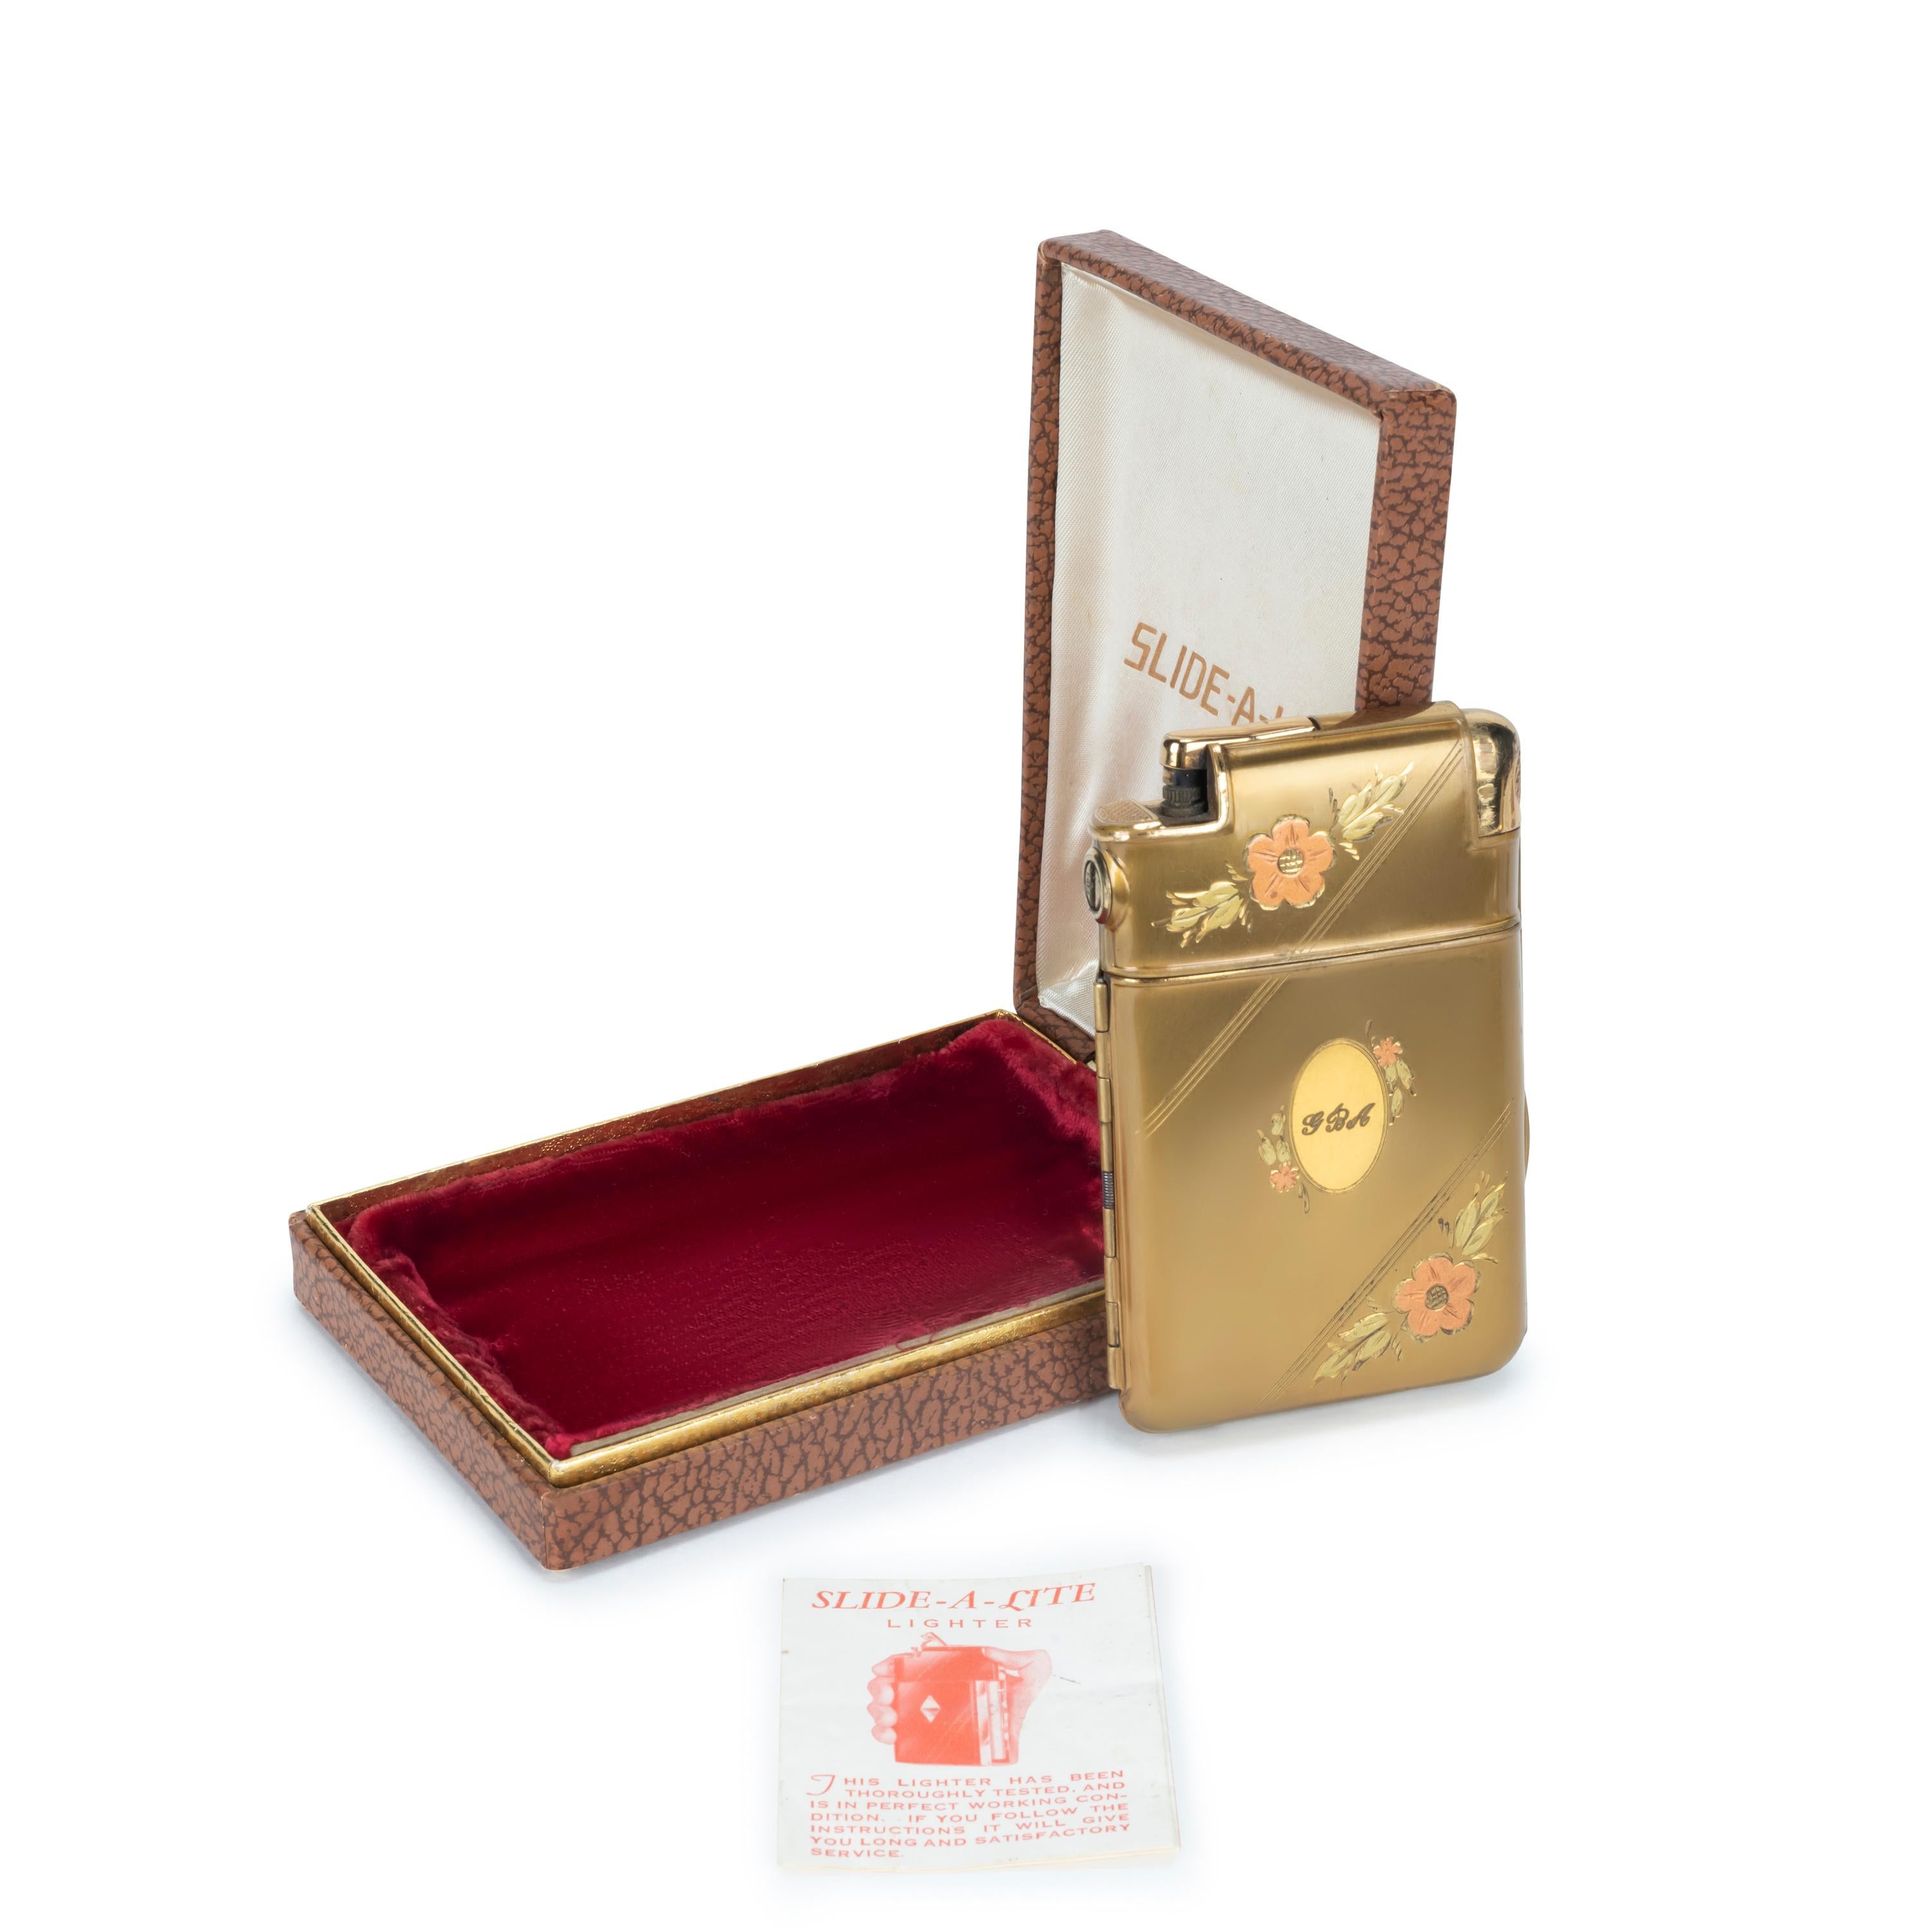 gold cigarette case with lighter